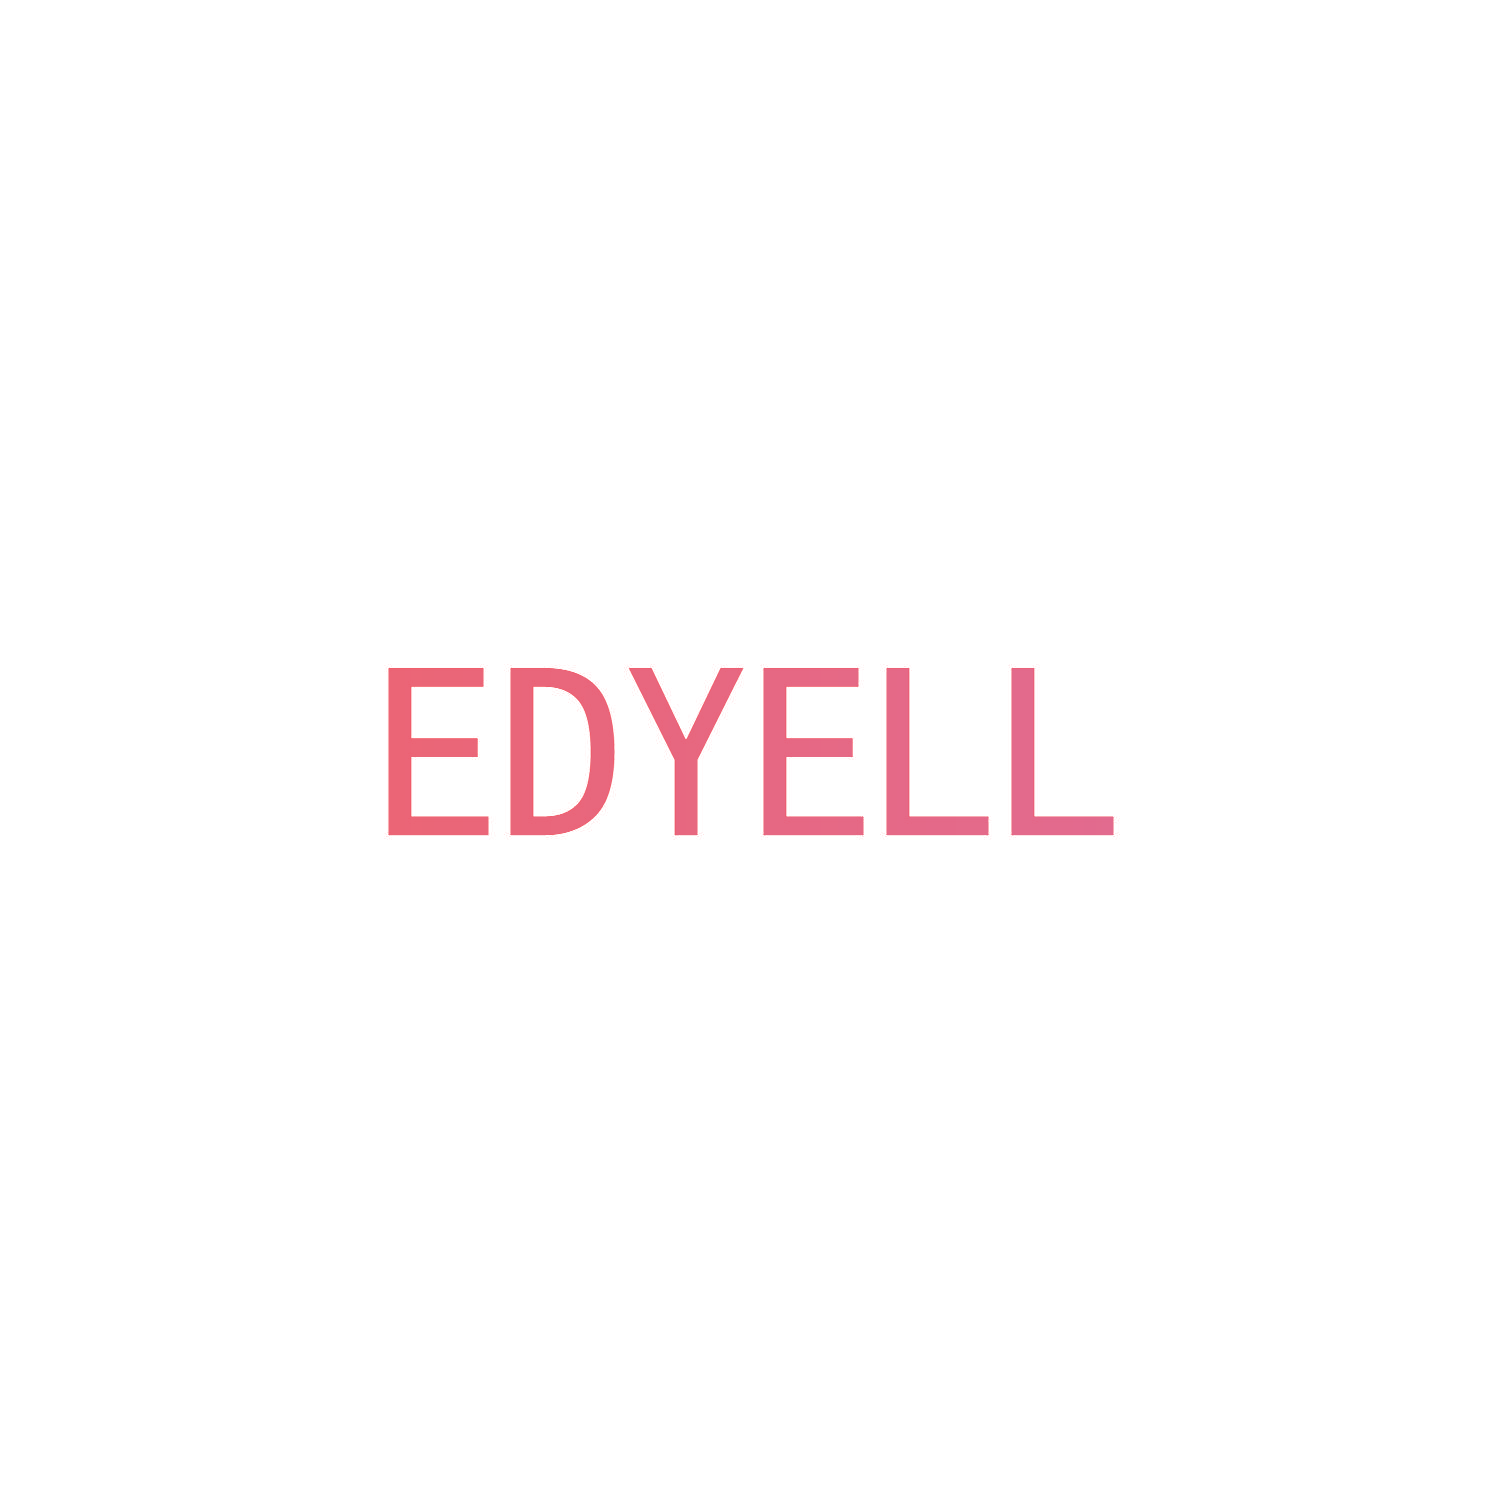 EDYELL